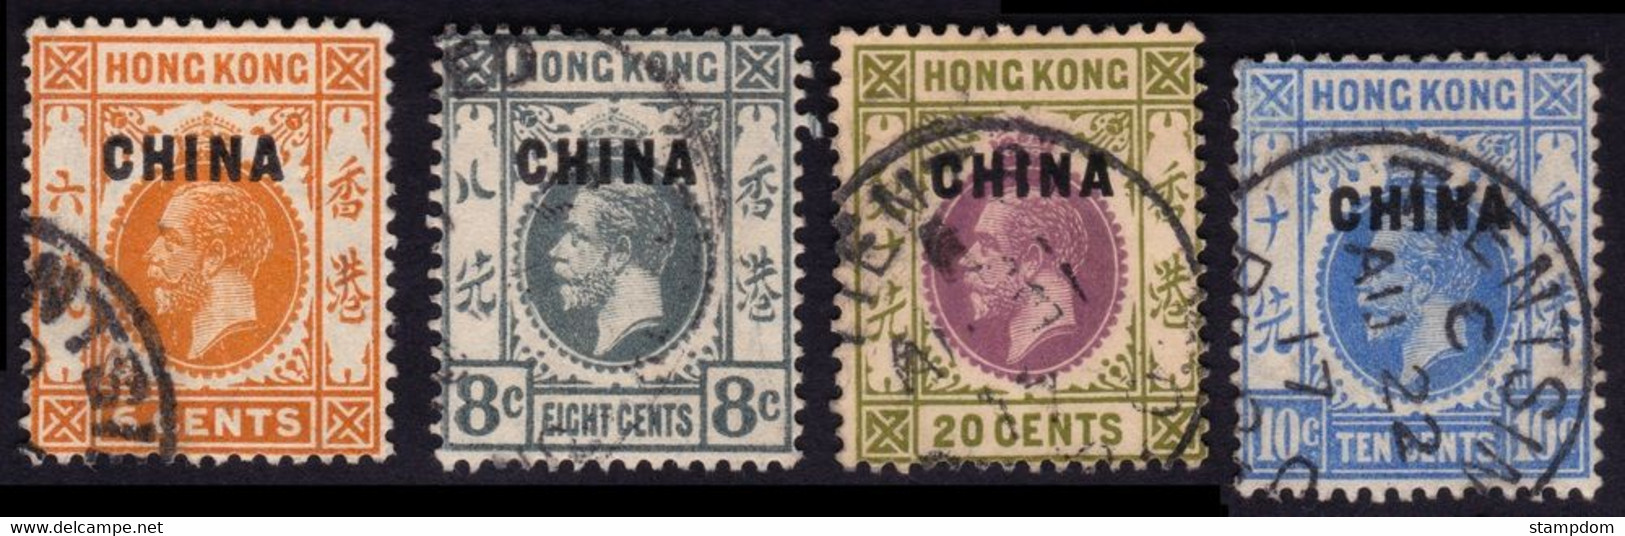 HONG KONG Overprinted With CHINA On 4 Hong Kong KG5 Stamps 6c, 8c, 10c &20c - USED @P904 - Usados